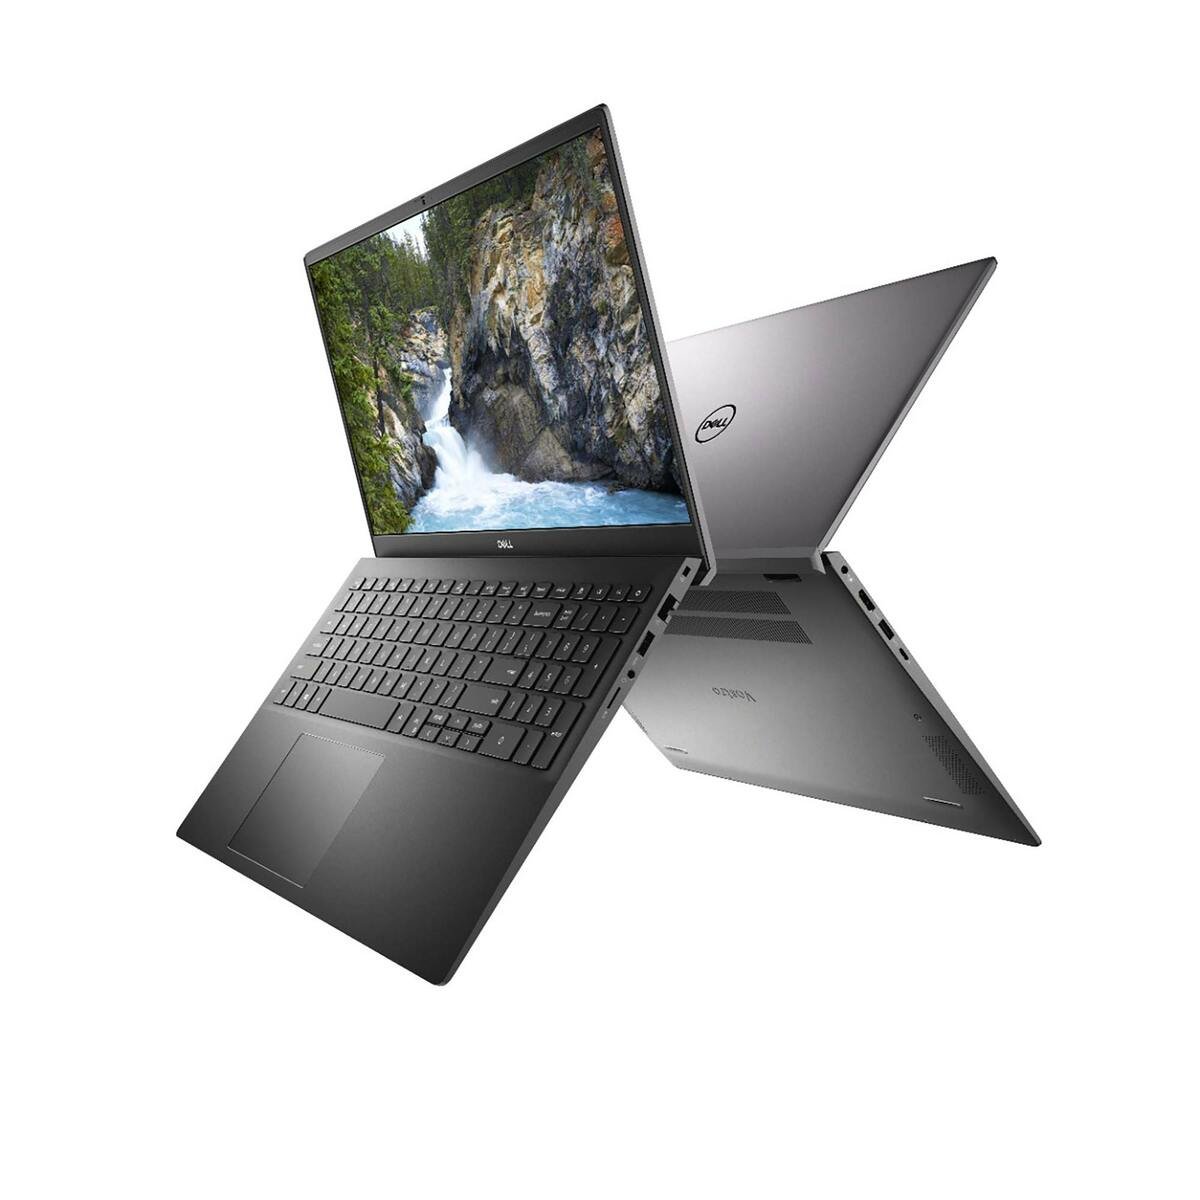 Dell Vostro 5501 (5501-VOS-6005-GRY) Laptop, Intel Core i5-1035G1, 15.6" FHD, 8GB RAM, 1TB SSD, 2GB Graphics, Windows 10, Gray